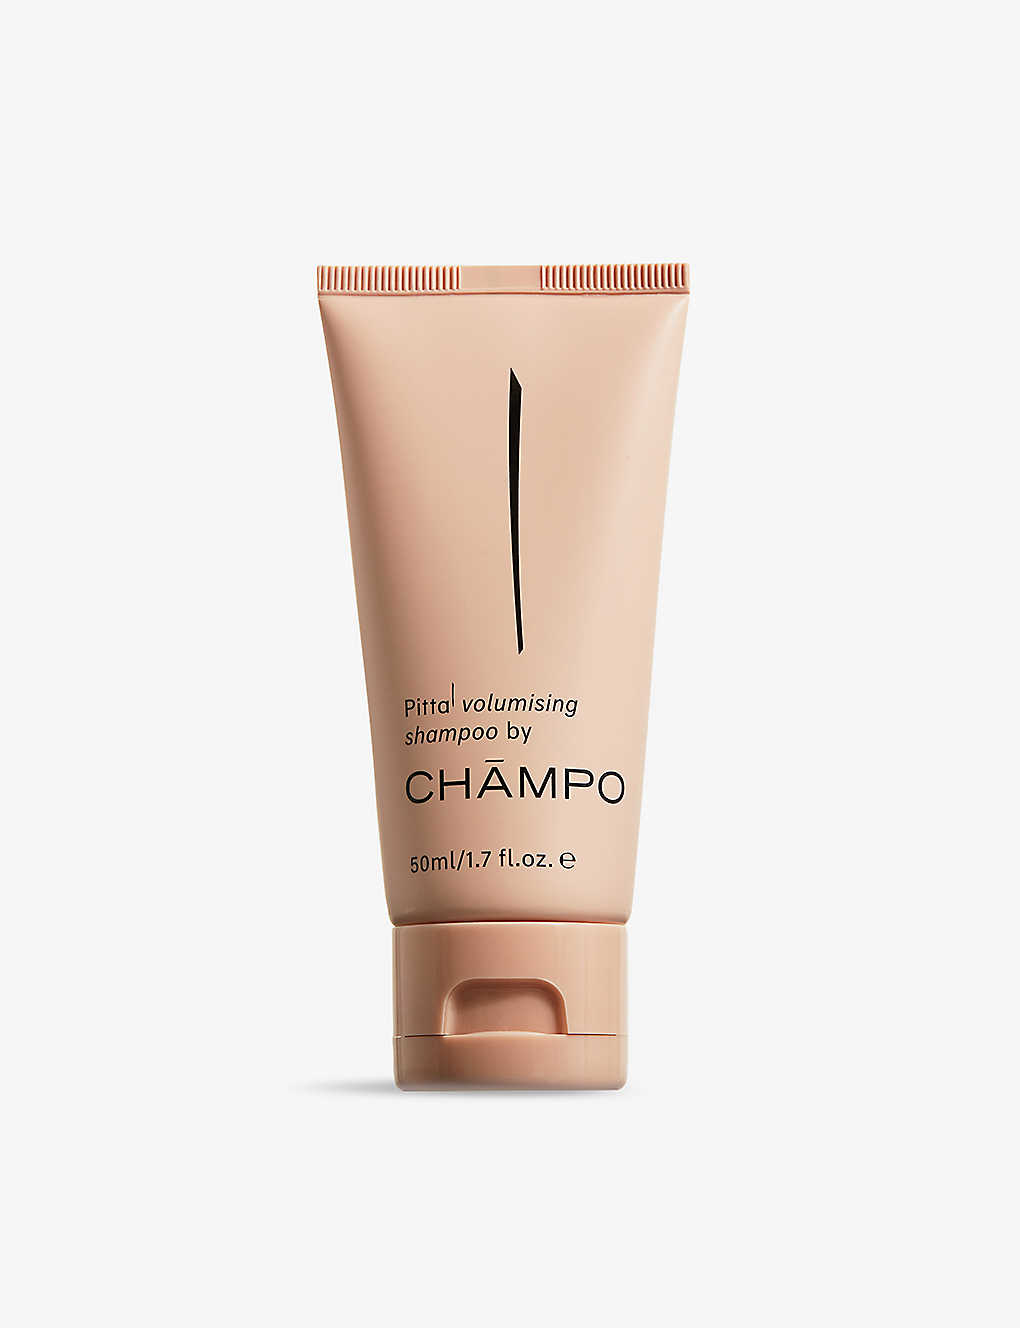 Champo Pitta Volumising Shampoo